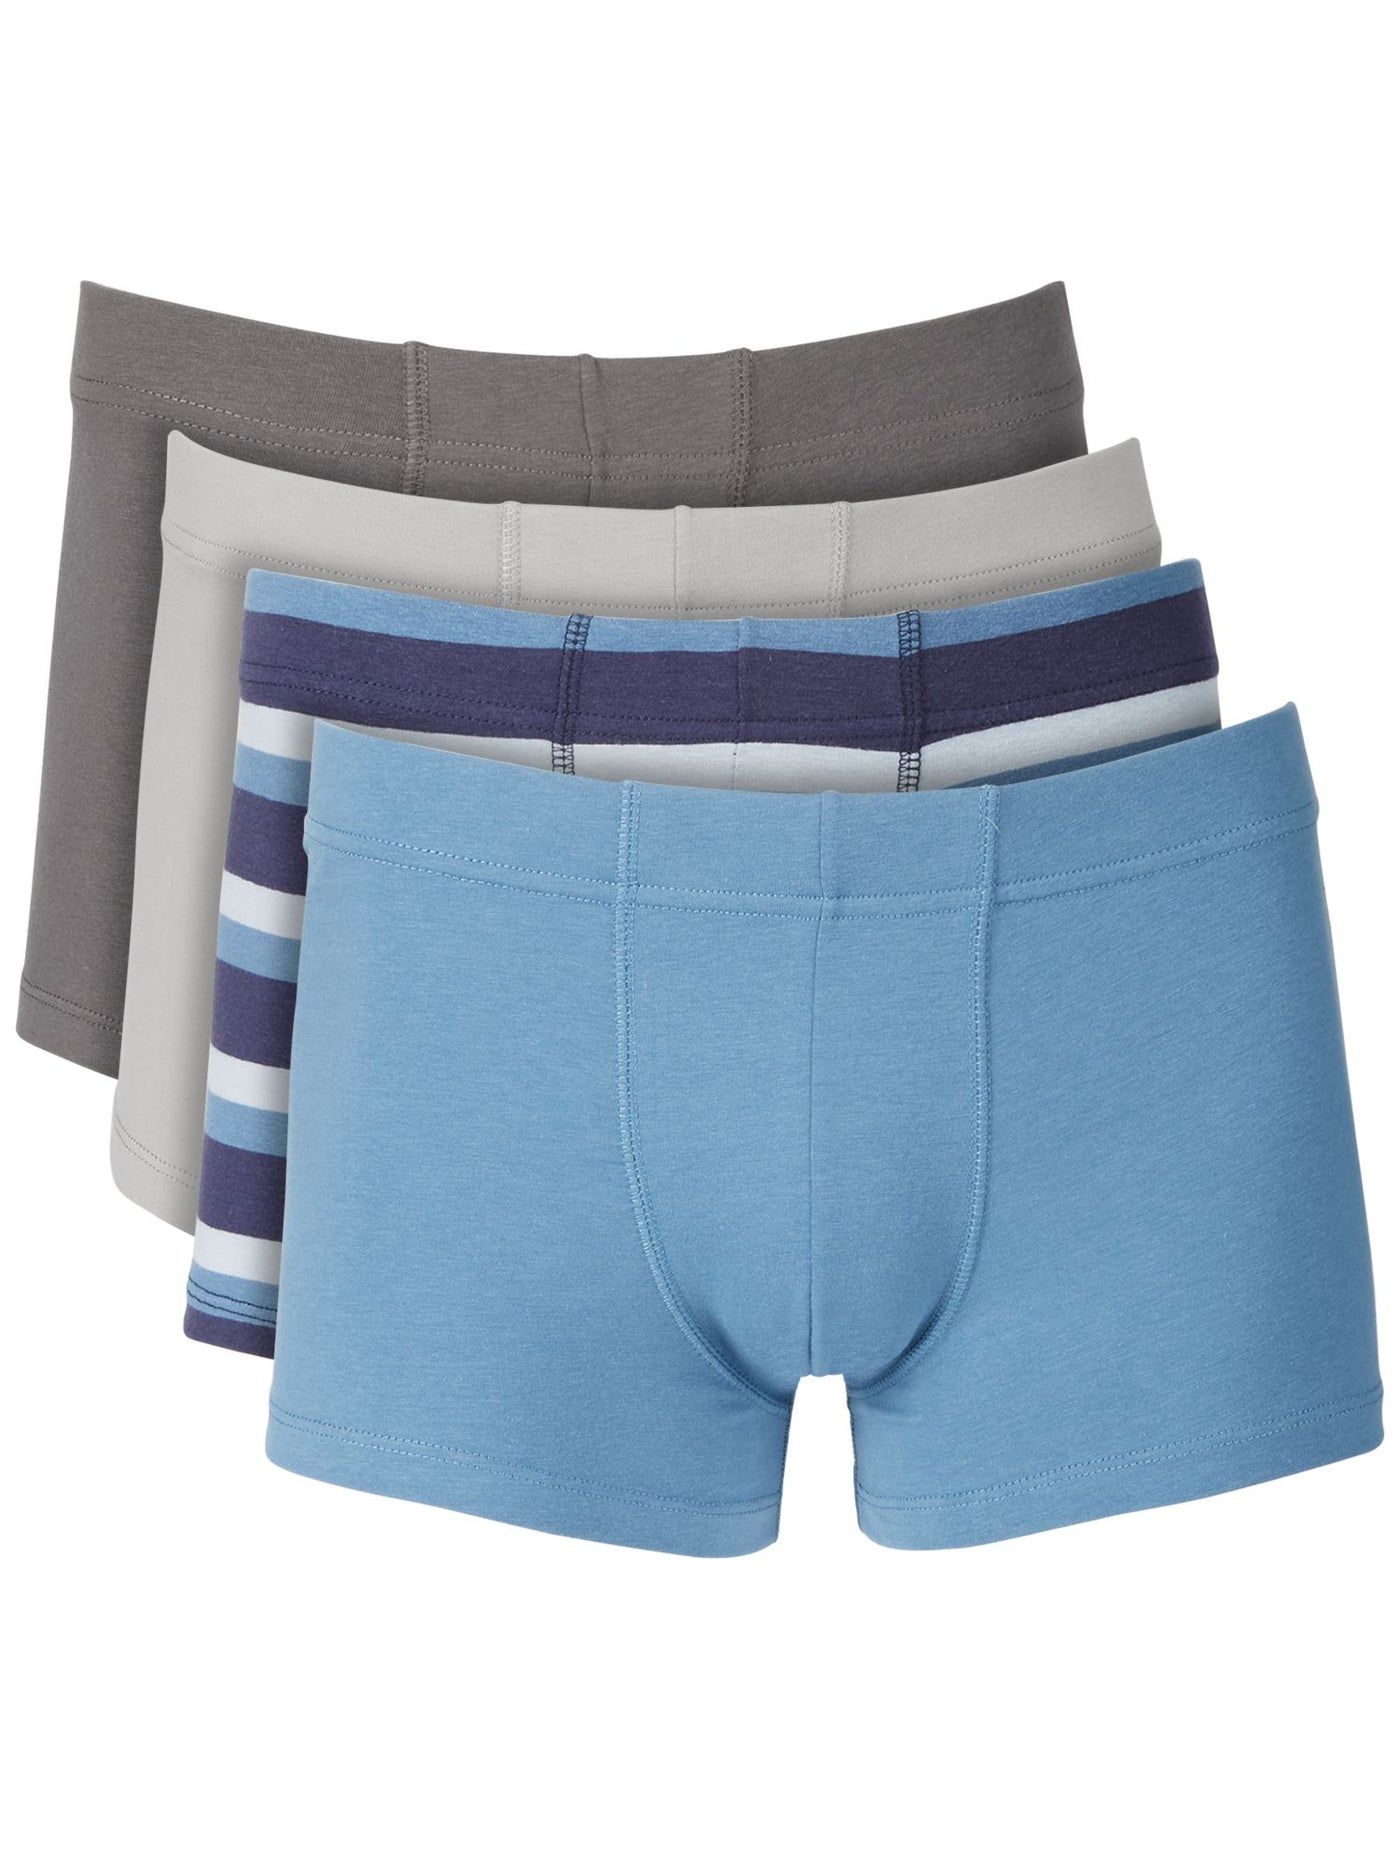 ALFANI Intimates 4 Pack Gray Trunk Underwear S